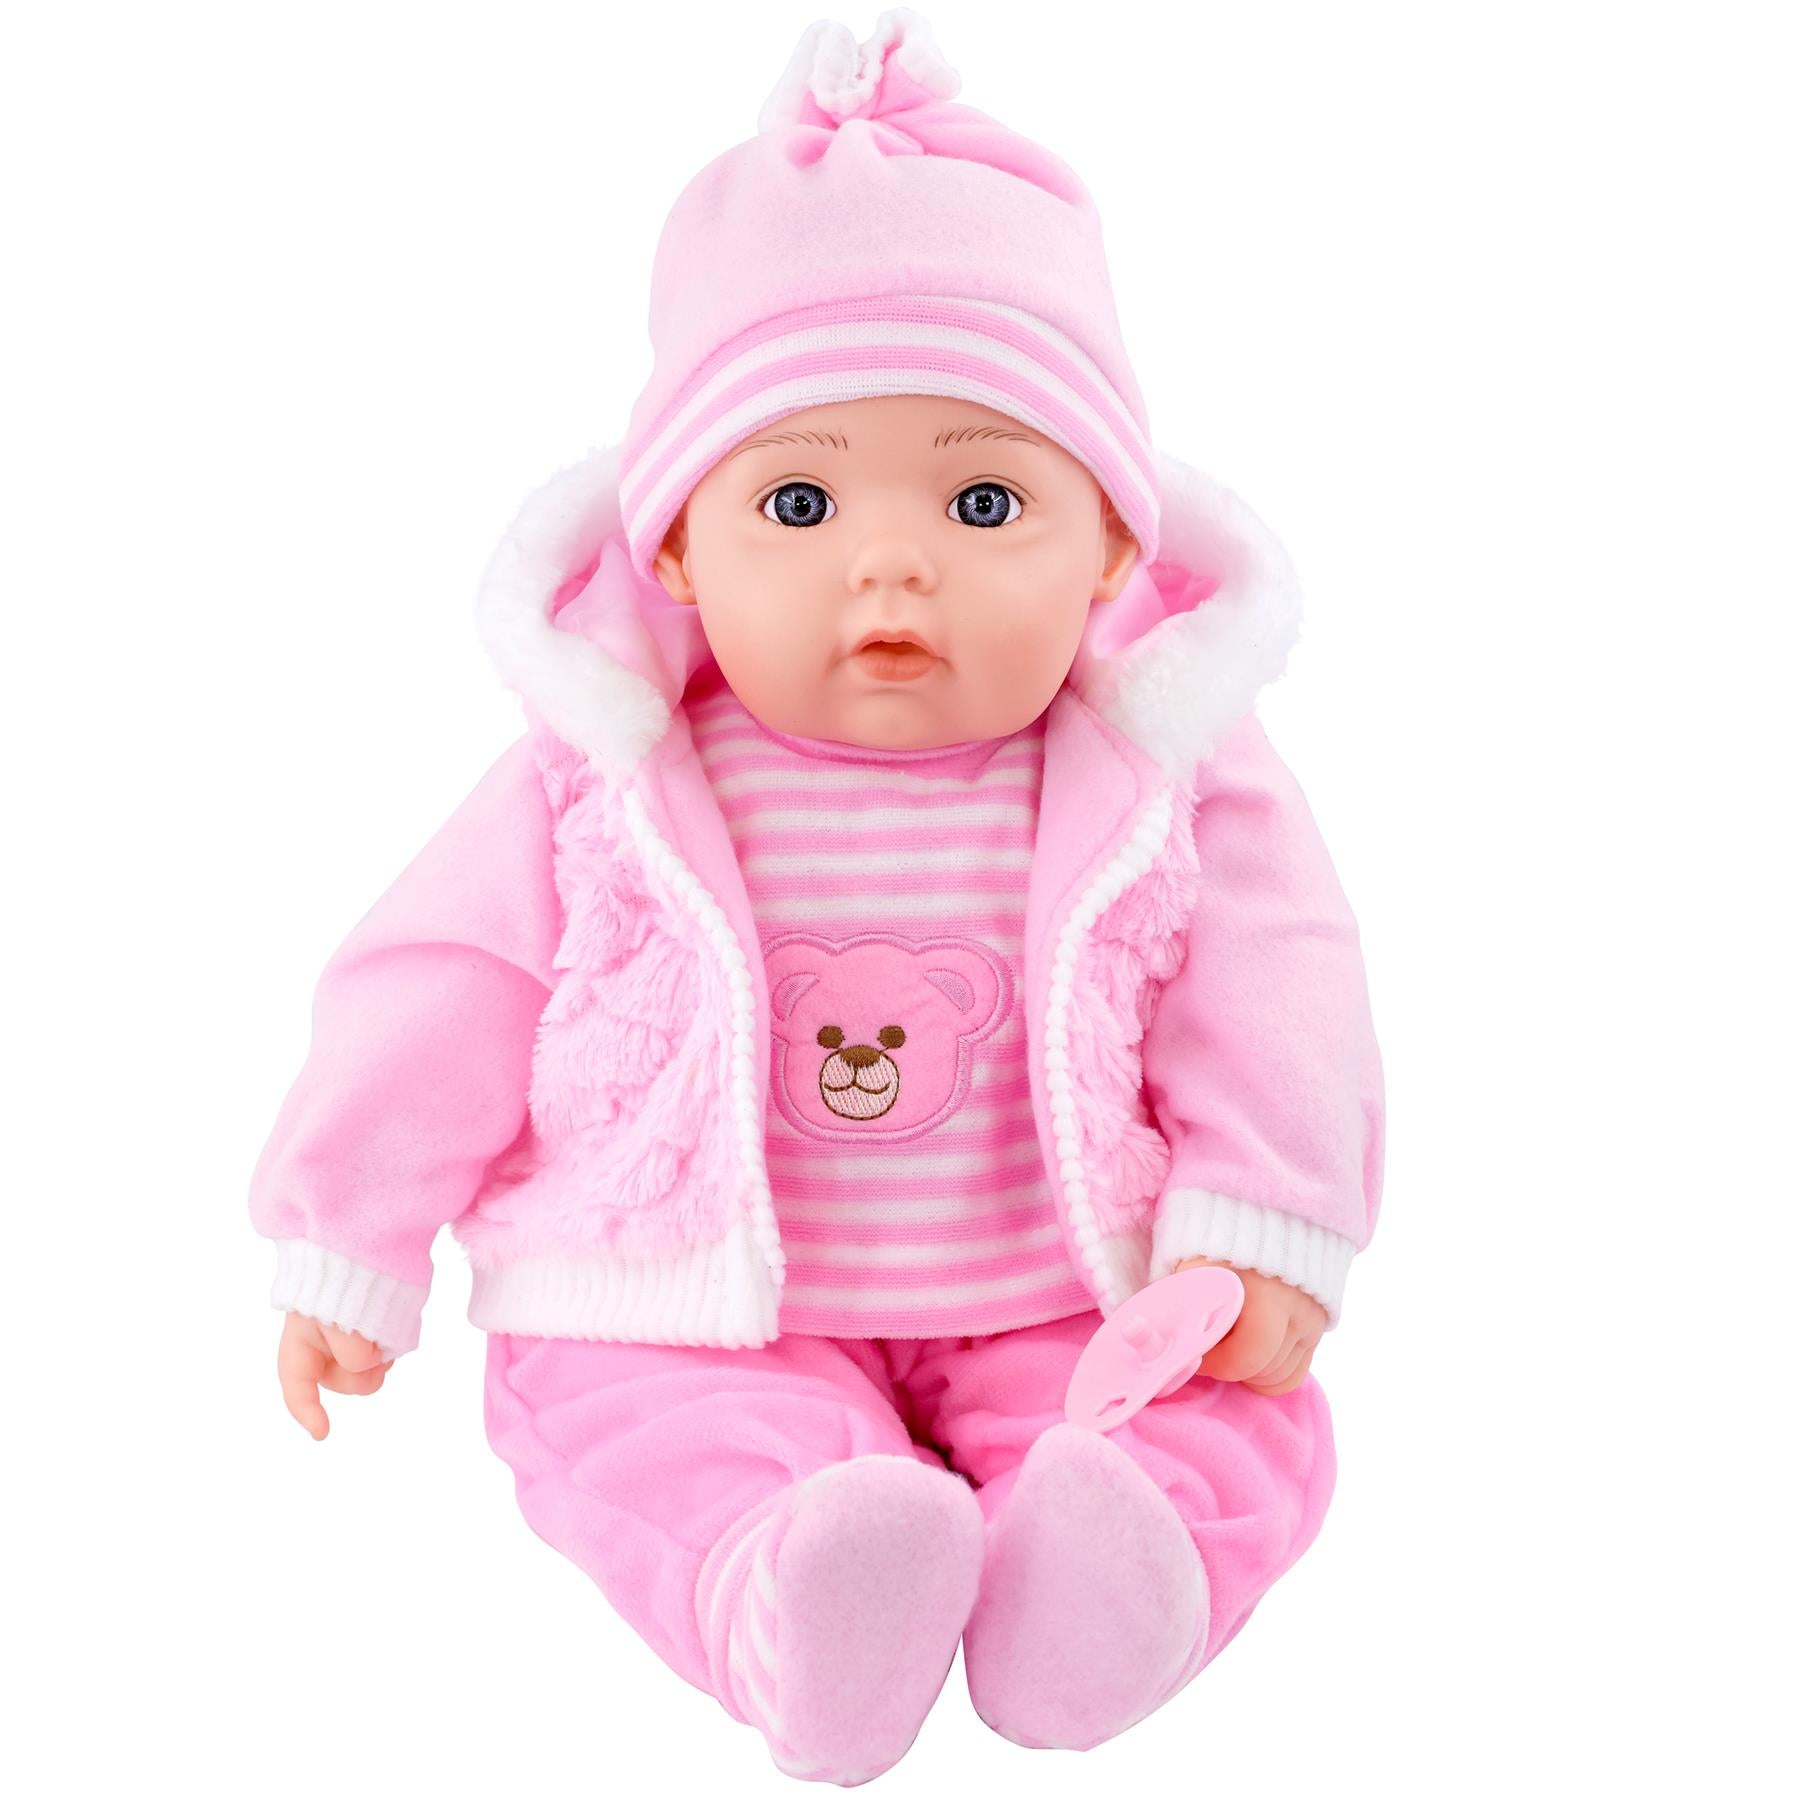 Baby Pink Bibi Baby Doll Toy With Dummy & Sounds by BiBi Doll - UKBuyZone